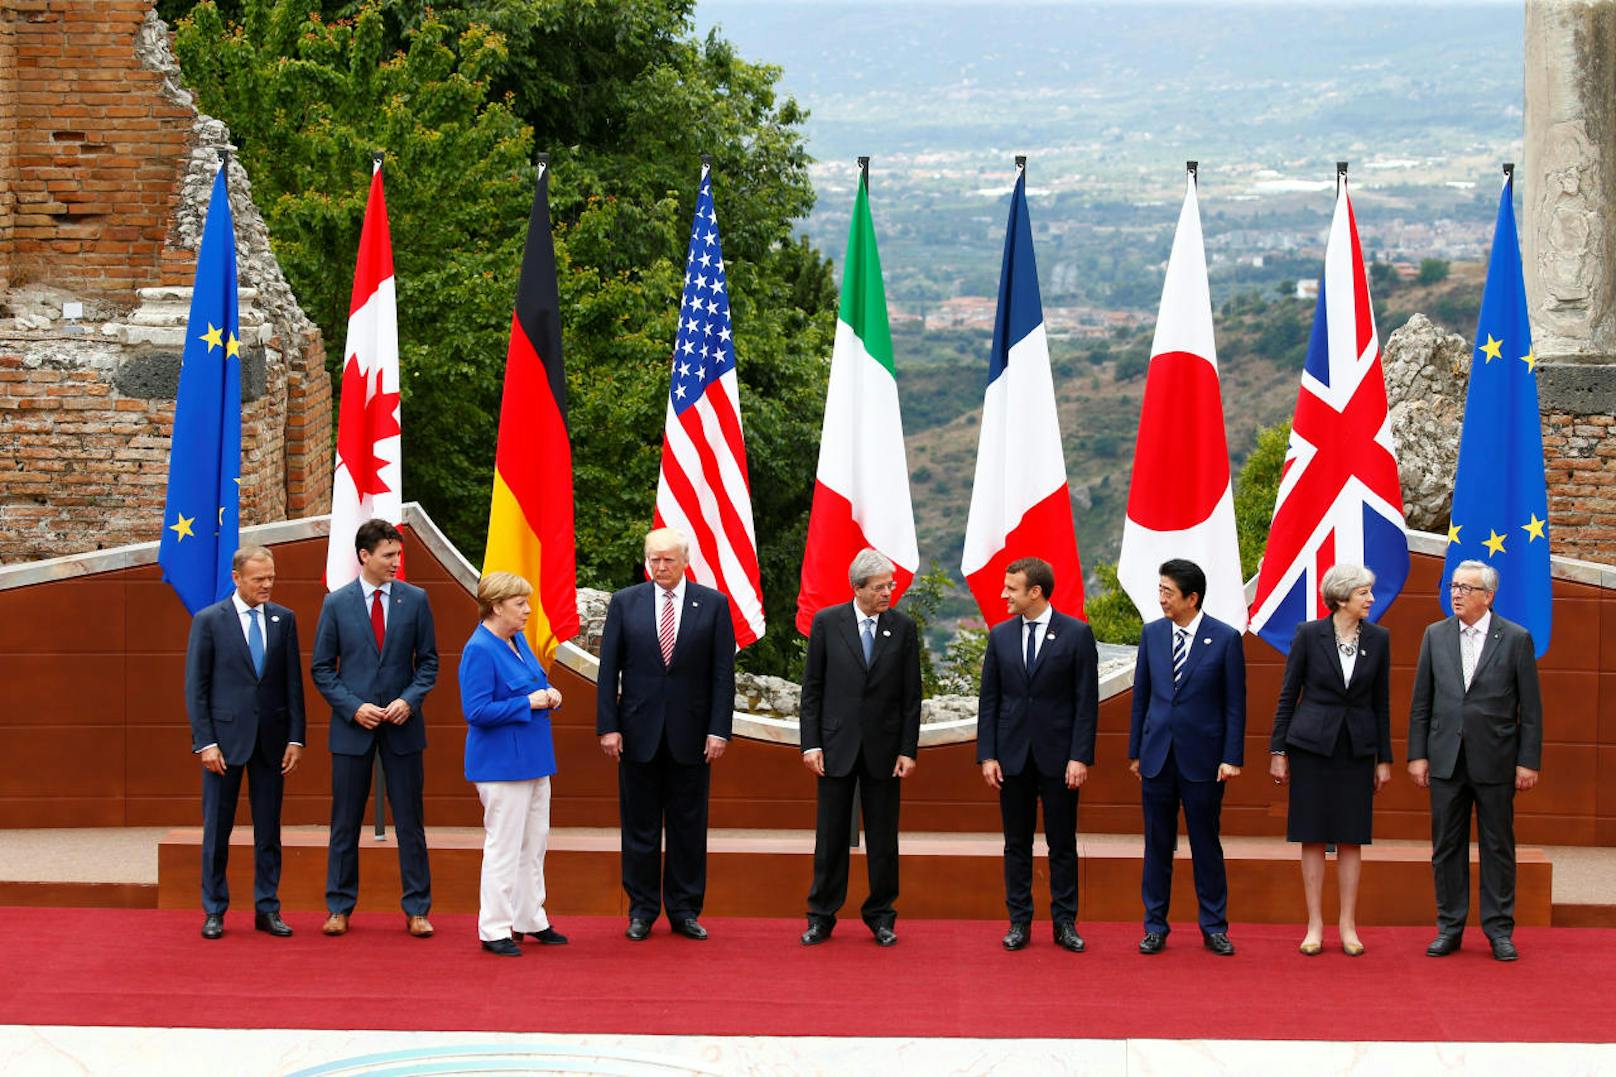 Donald Tusk, Justin Trudeau, Angela Merkel, Donald Trump, Paolo Gentiloni, Emmanuel Macron, Shinzo Abe, Theresa May und Jean-Claude (v.l.n.r.) treffen sich zum G7-Gipfel in Taormina